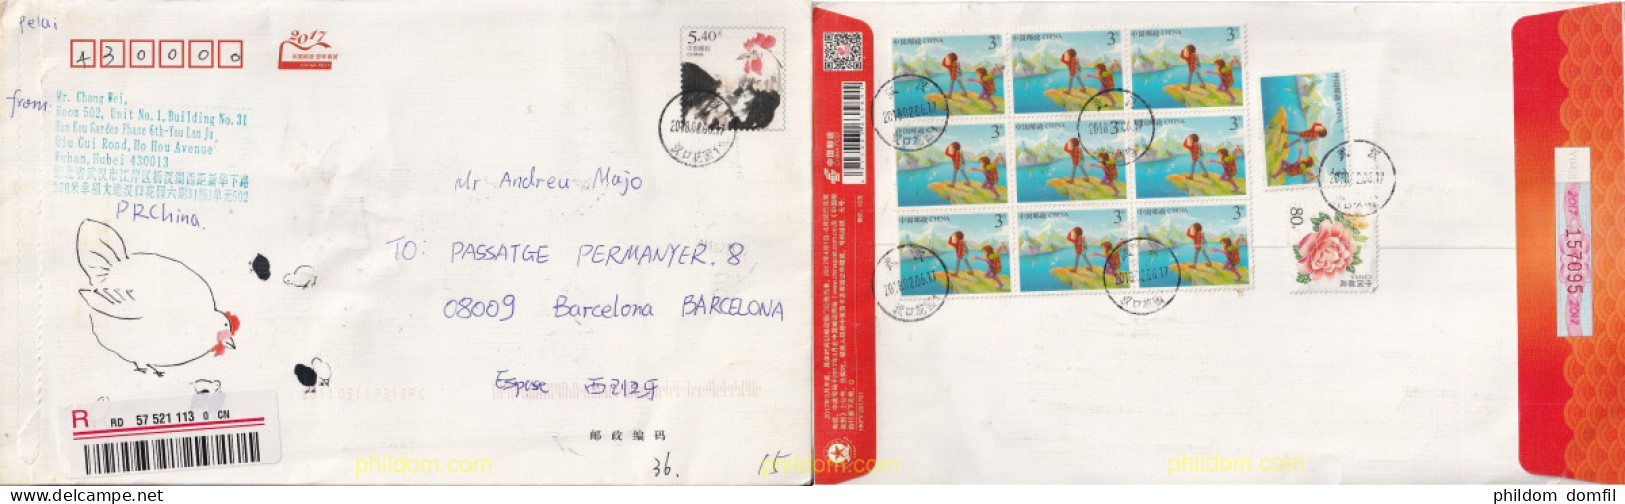 715221 MNH CHINA. República Popular 2017  - Unused Stamps